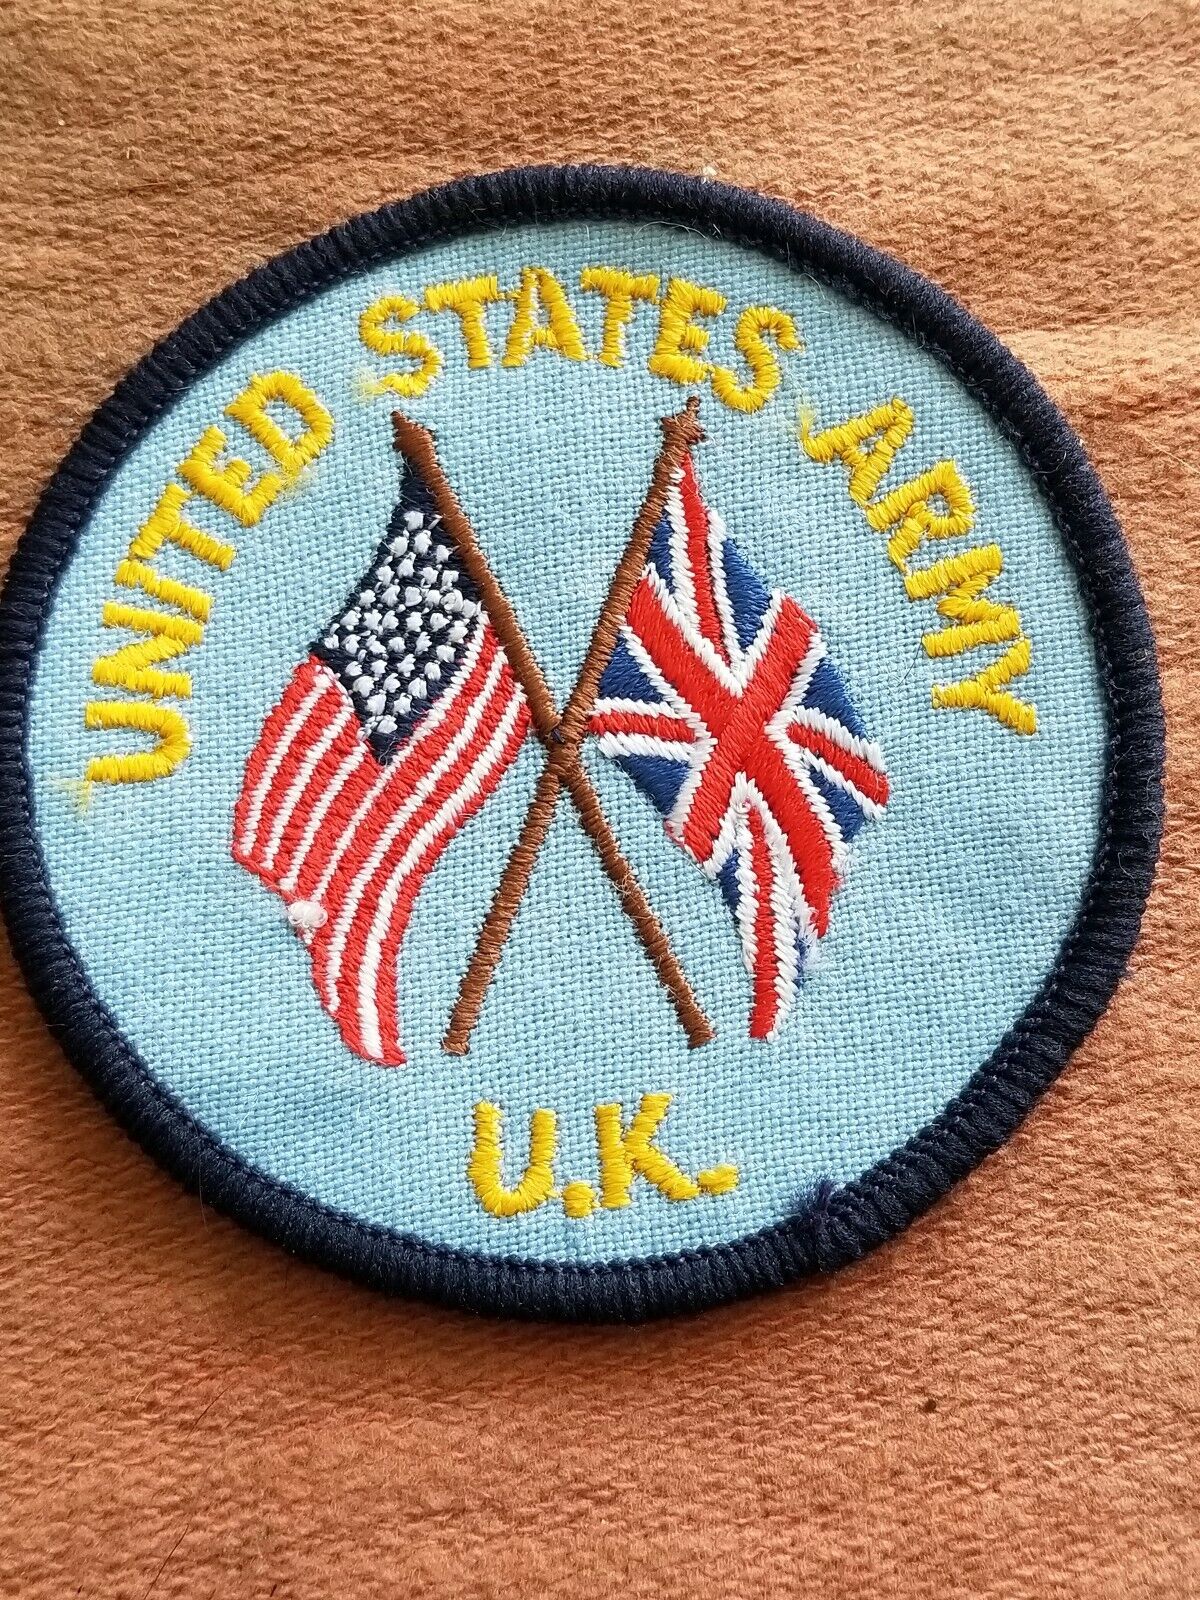 1960s 70s US Army Special Force United Kingdom RAF Base Burtwood Patch